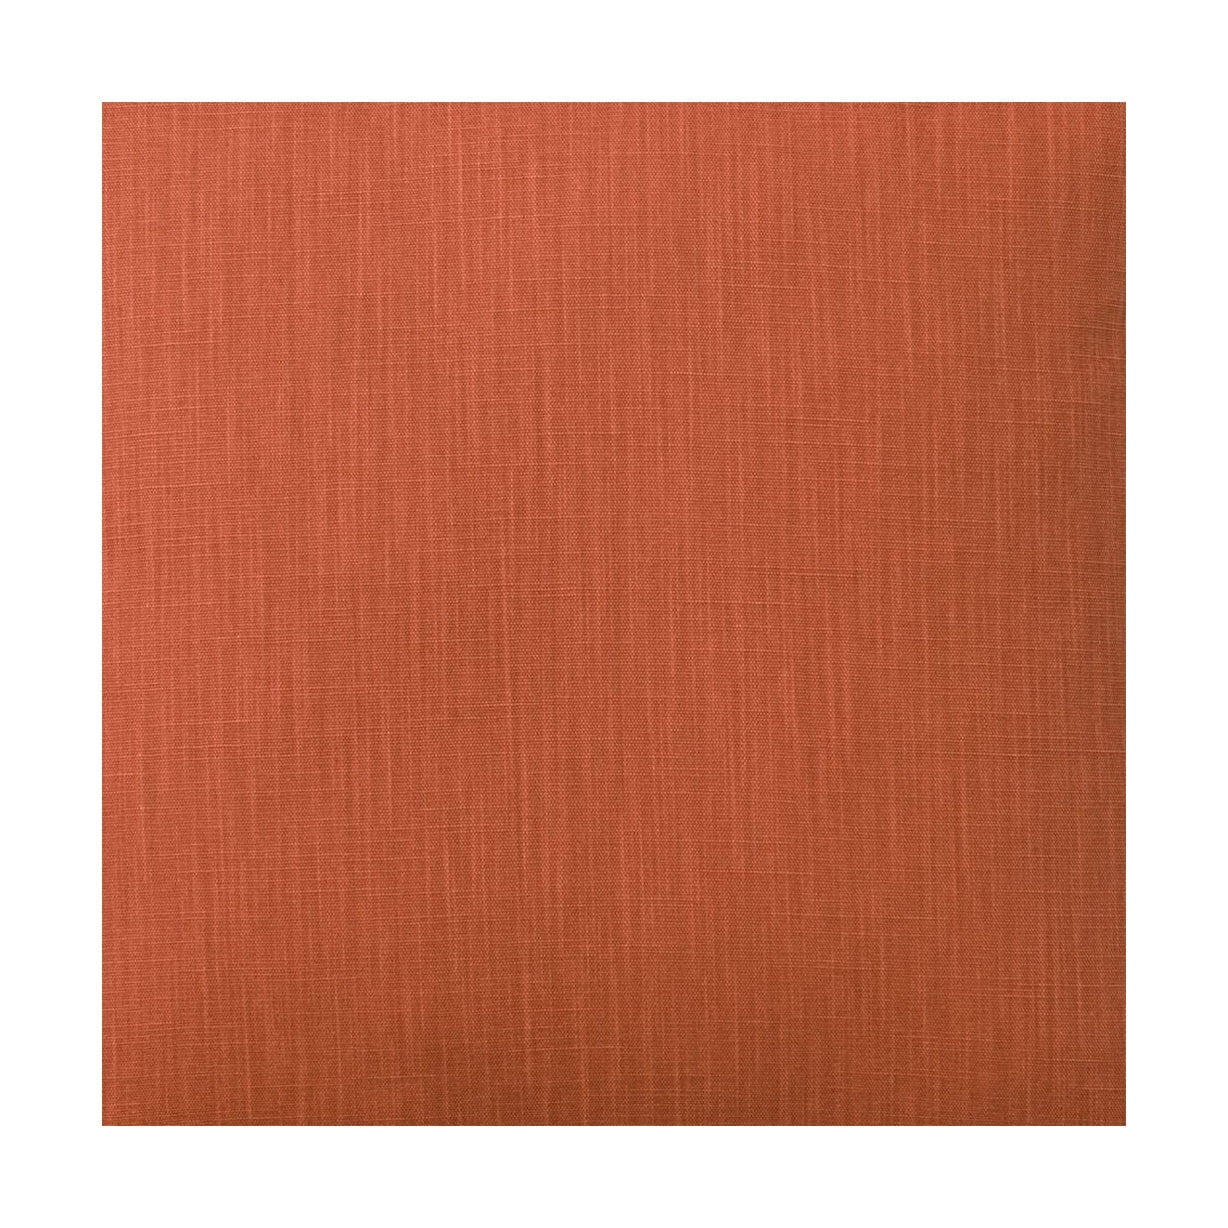 Spira Klotz Szerokość tkaniny 150 cm (cena za metr), Terrakotta